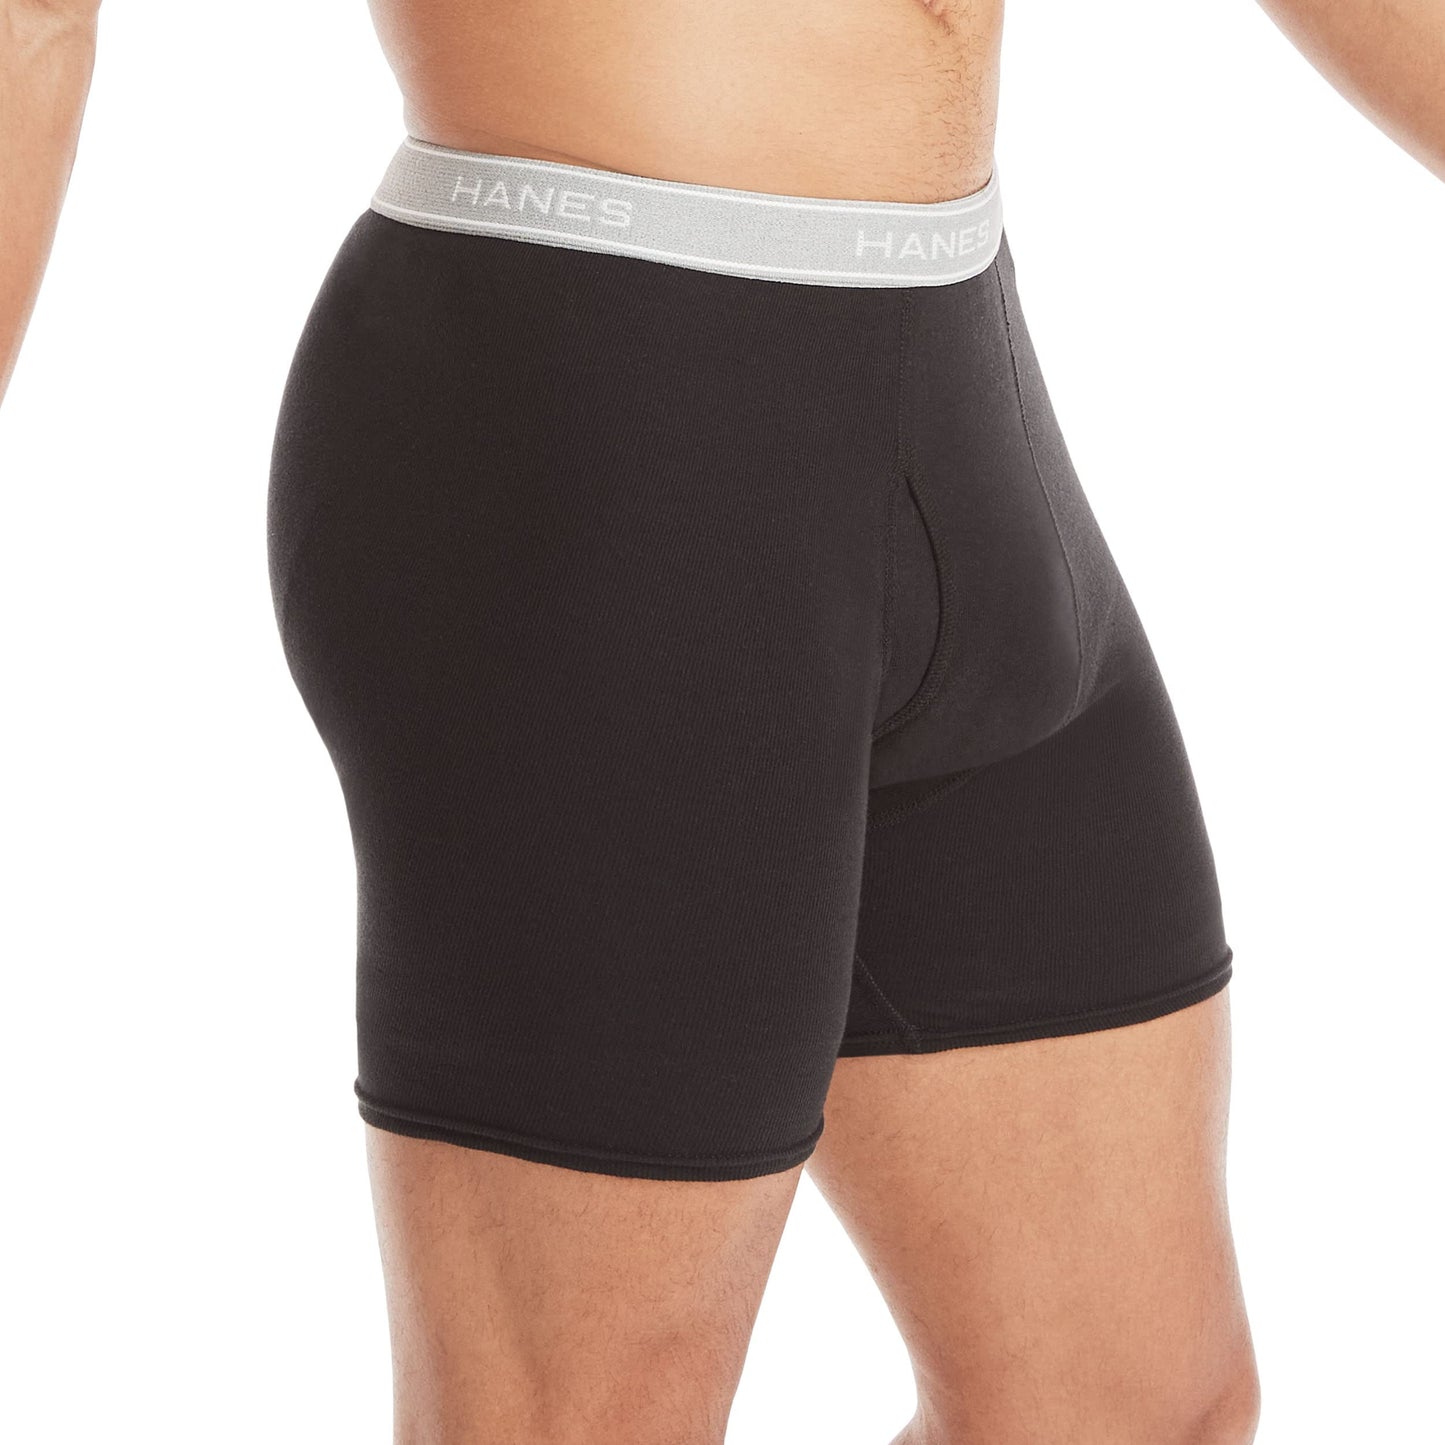 Hanes Men's Boxer Soft Breathable Cotton ComfortFlex Waistband, Multipack Brief Underwear, 6 Pack - Black/Gray, Large